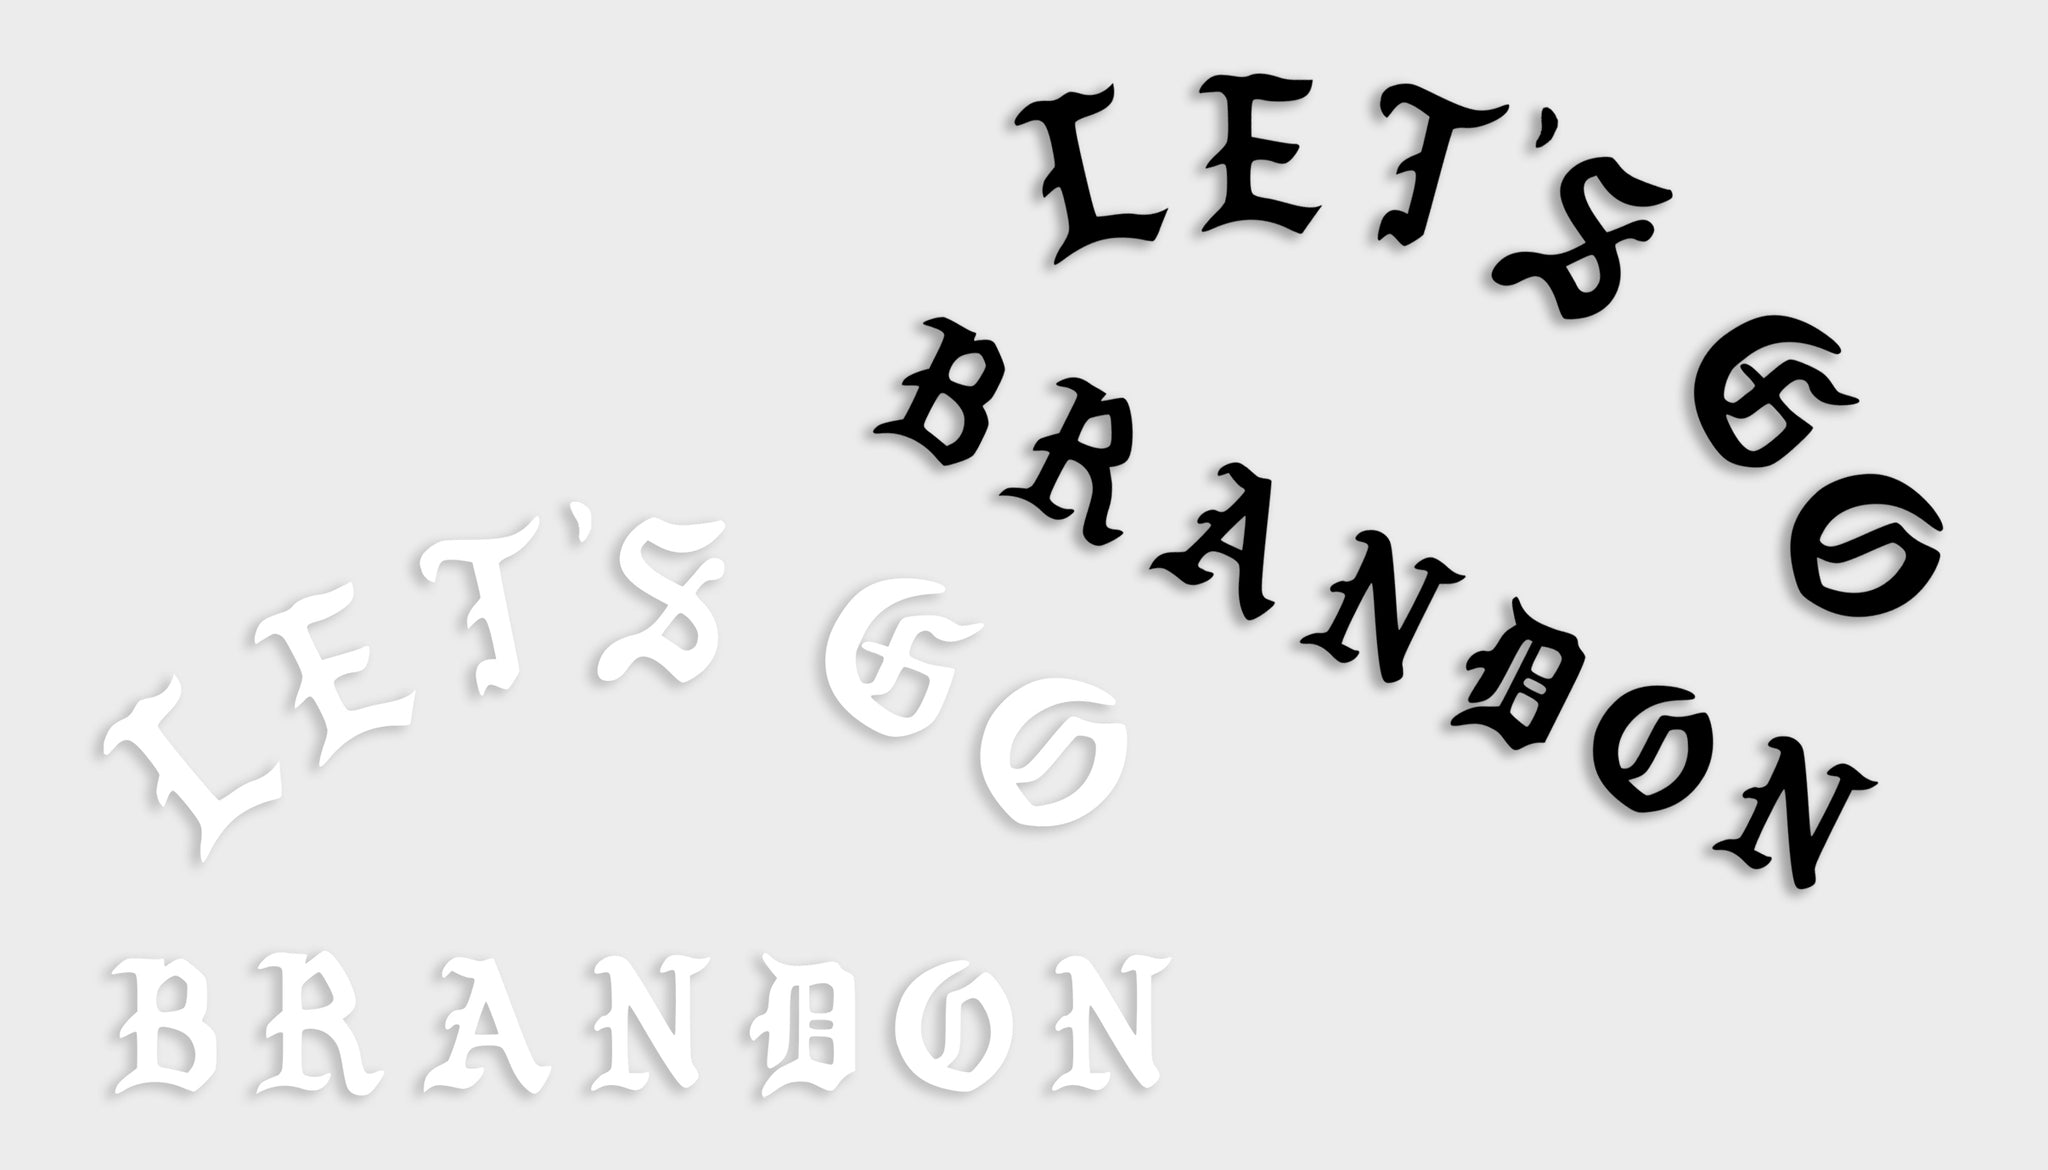 Let's Go Brandon Decal Vinyl Sticker - White Large - Randall Pich